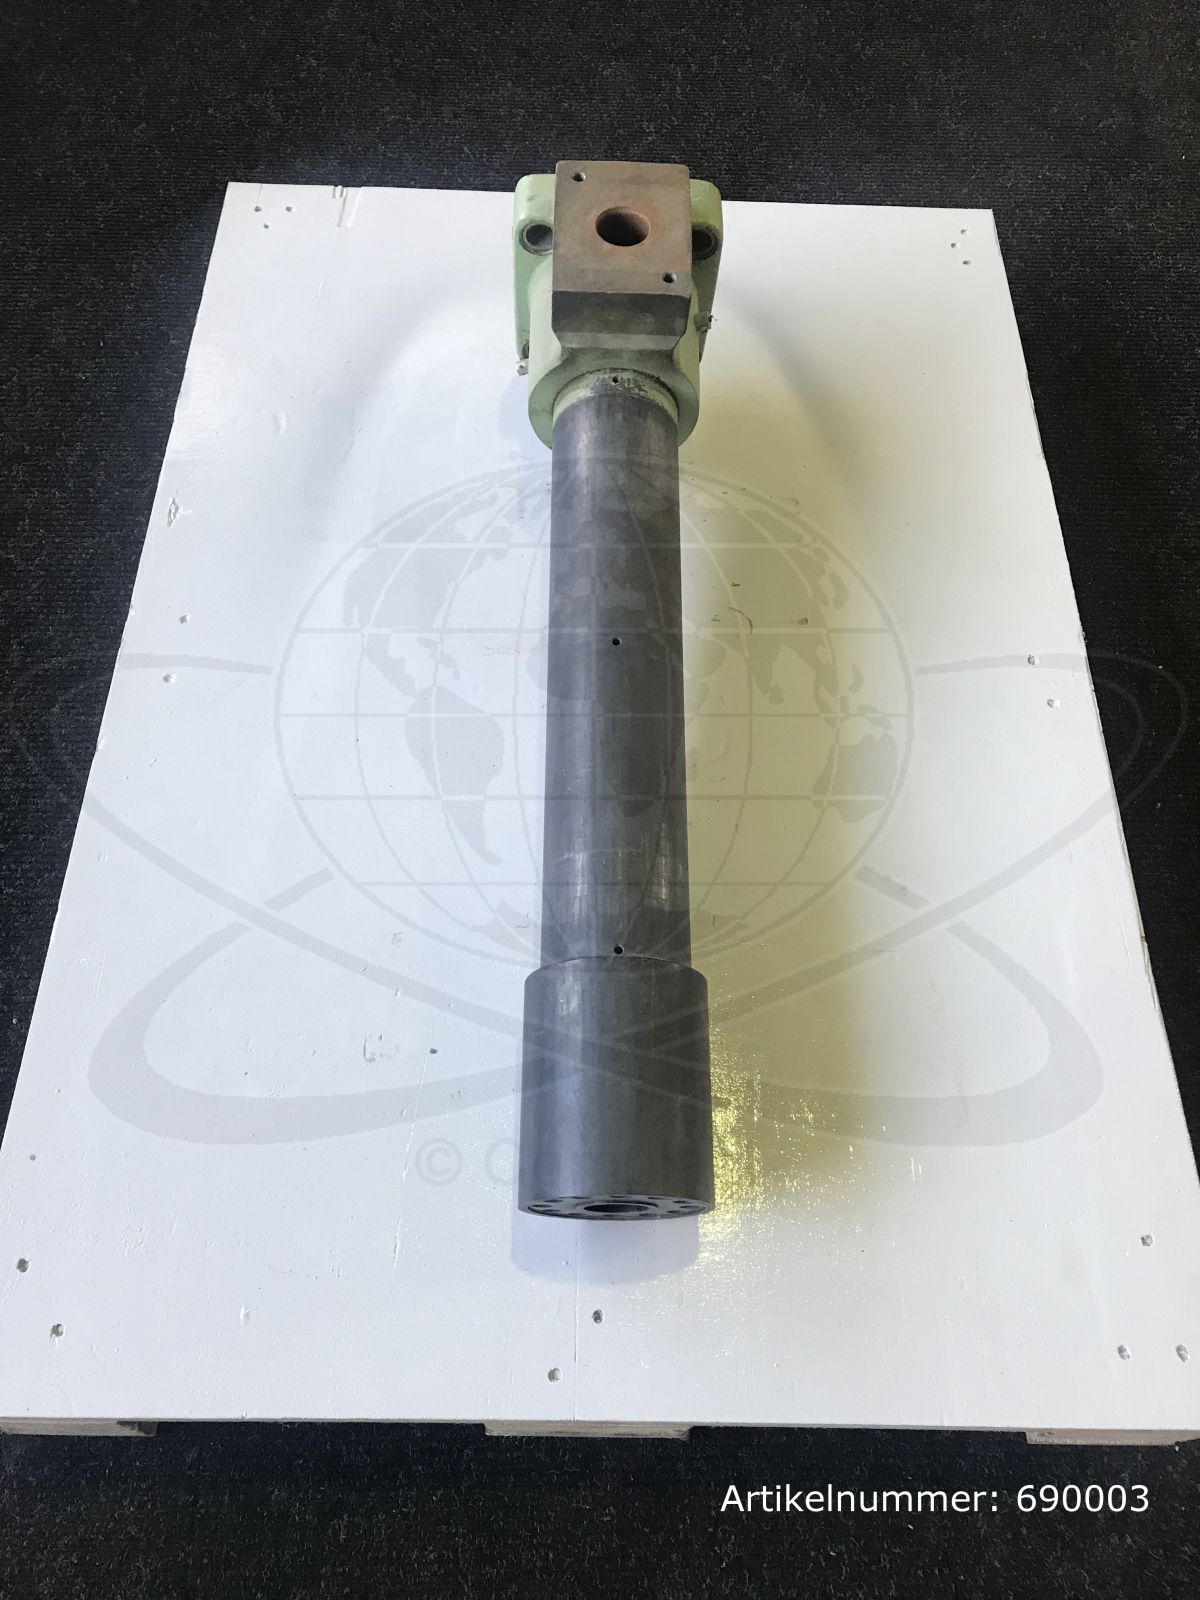 Ferromatik Milacron Plastifizierzylinder IU170, Ø 40 mm